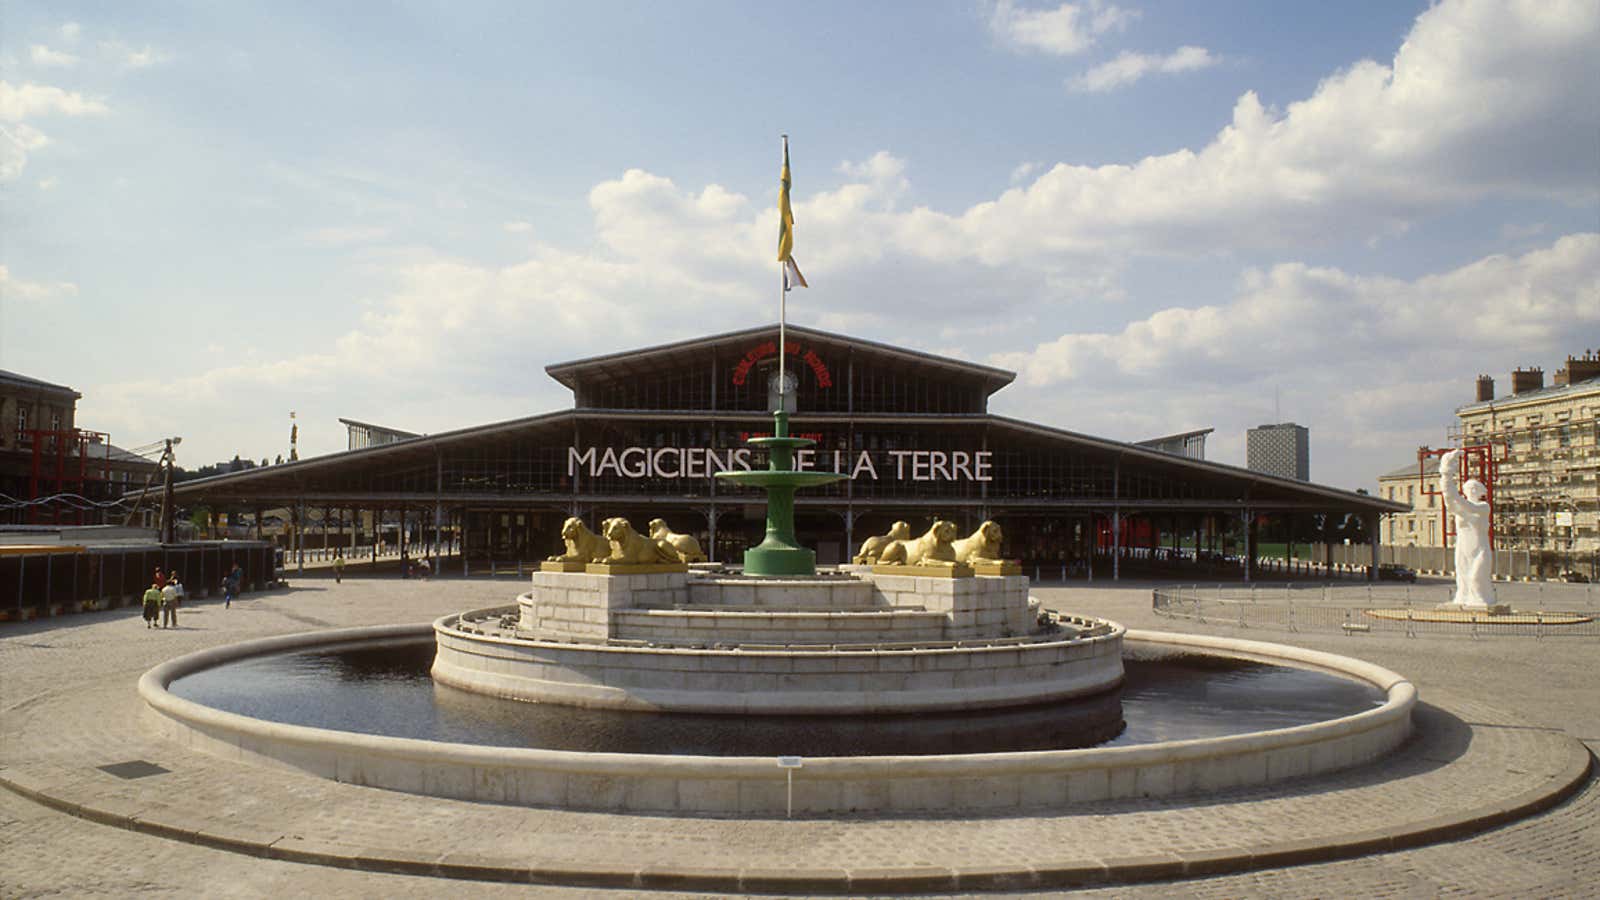 The entrance of Les Magiciens de la Terre at La Villette.